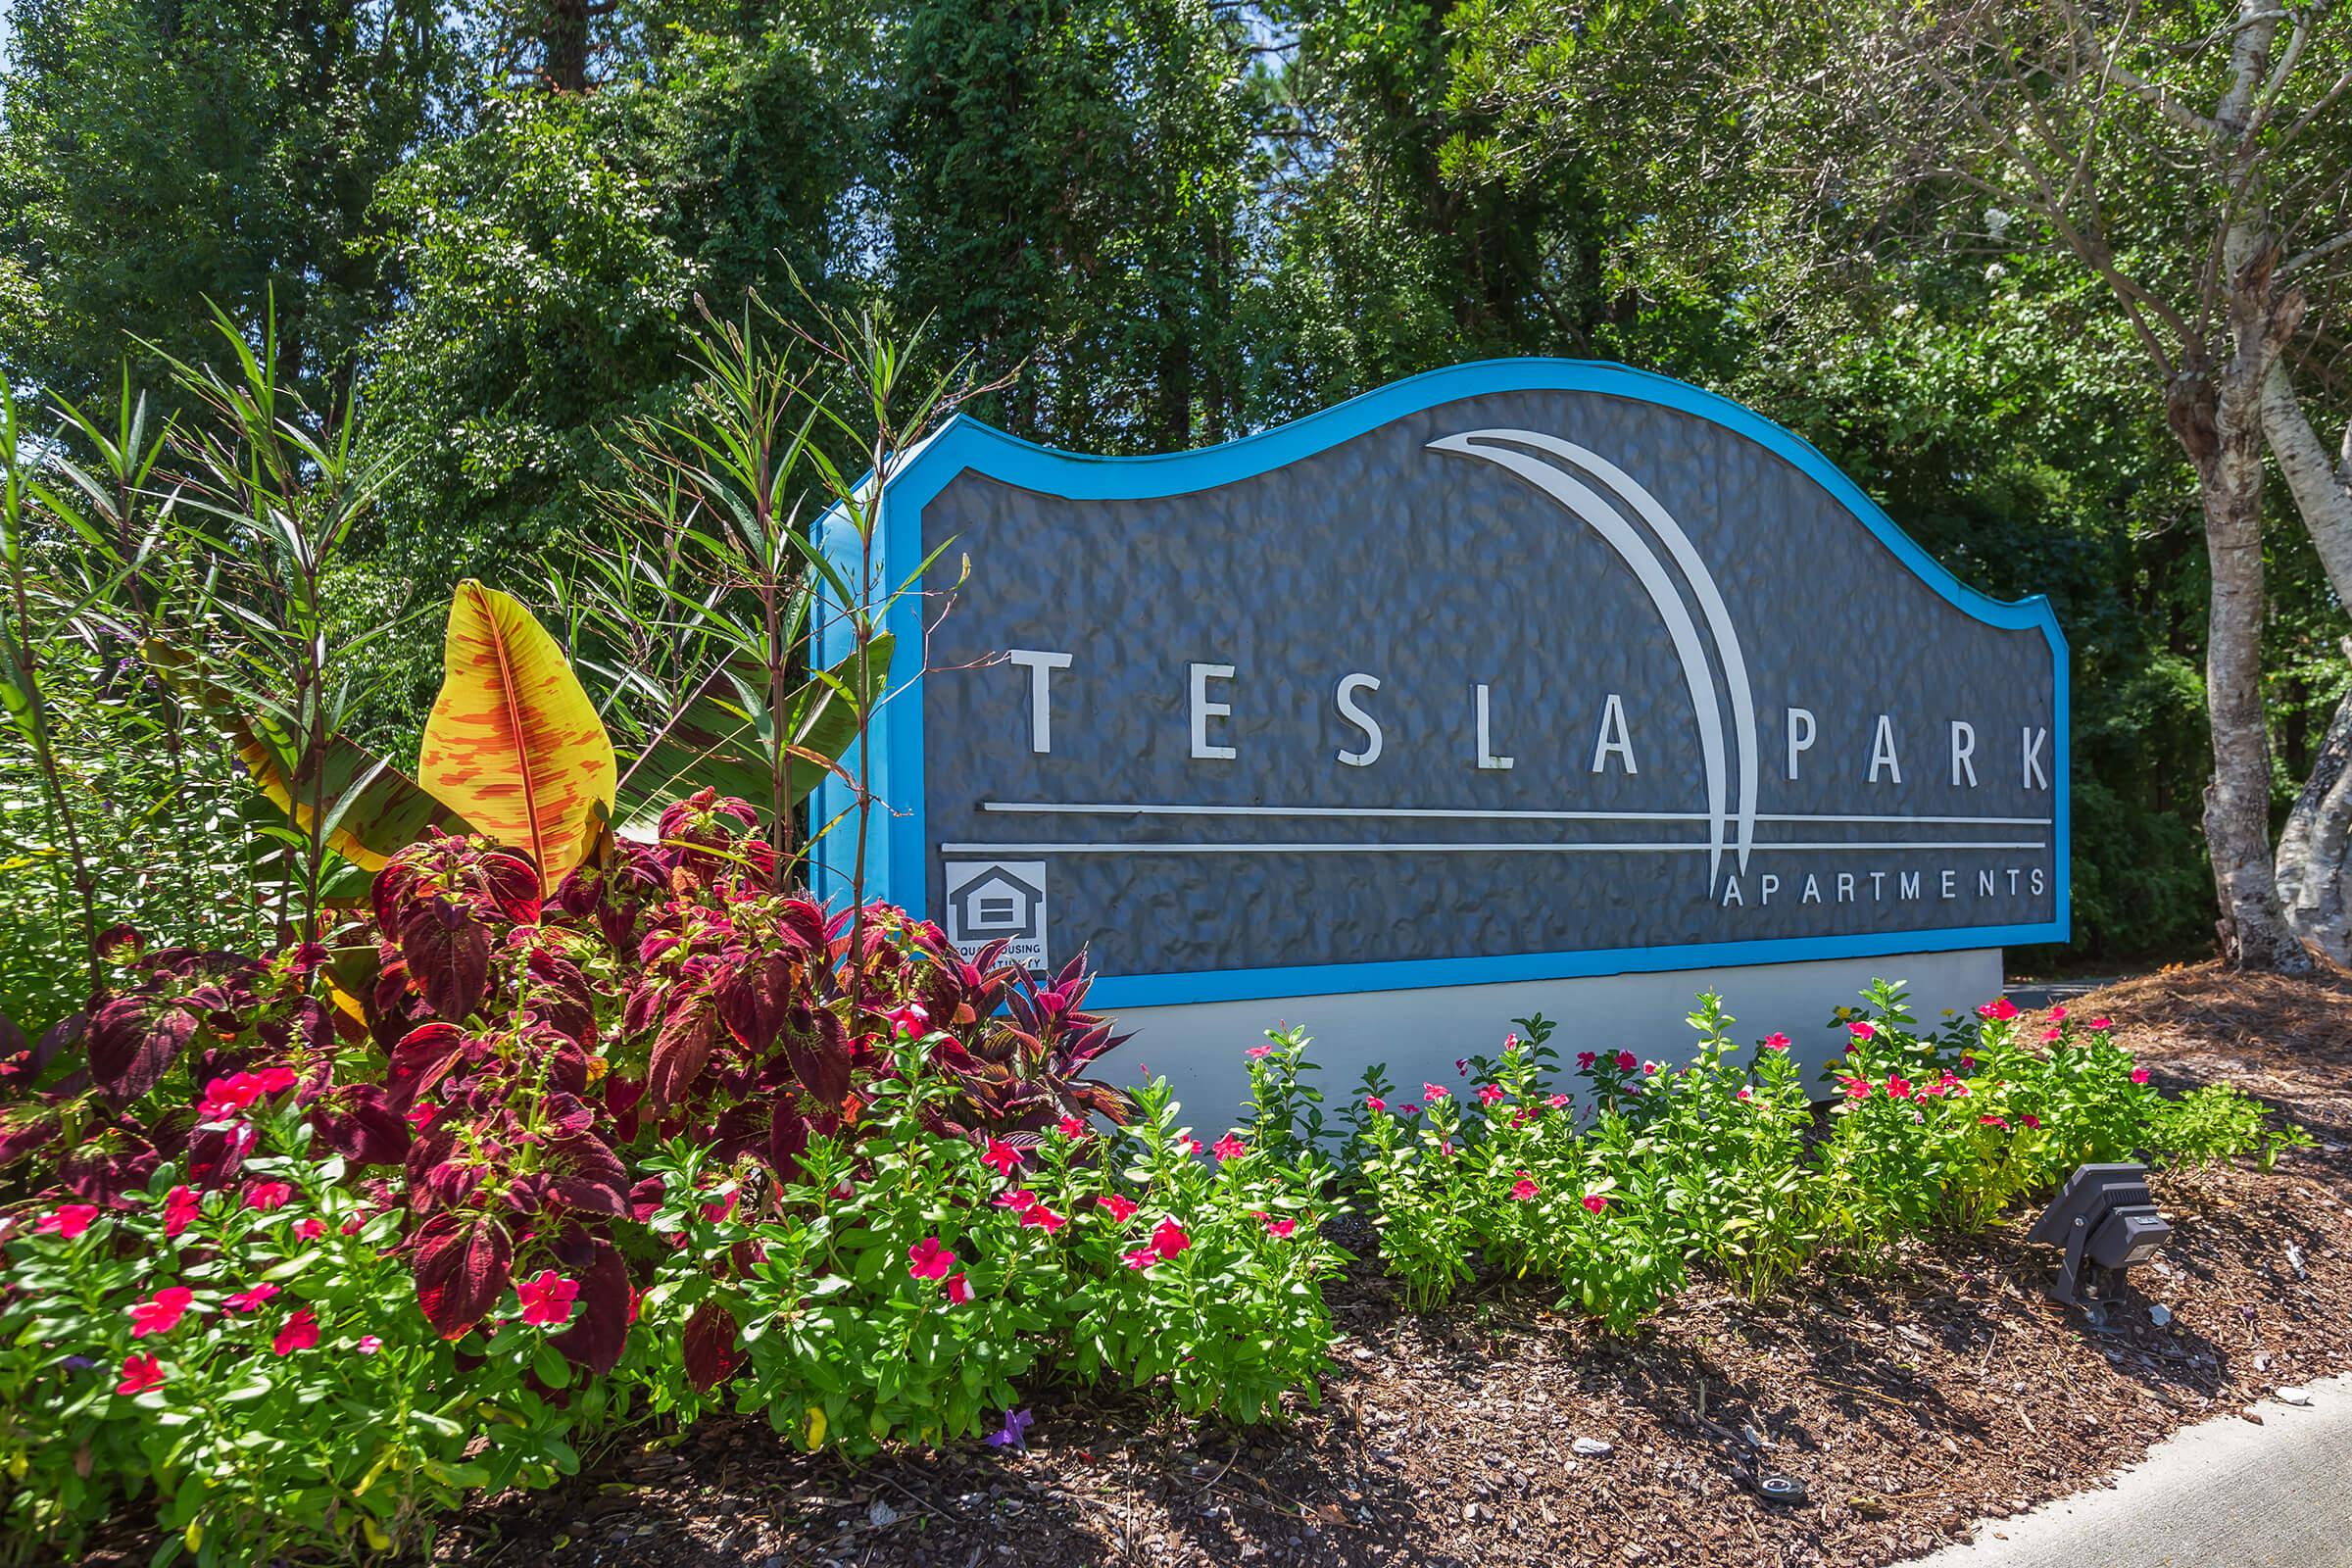 Main entrance at Tesla Park in Wilmington, NC.